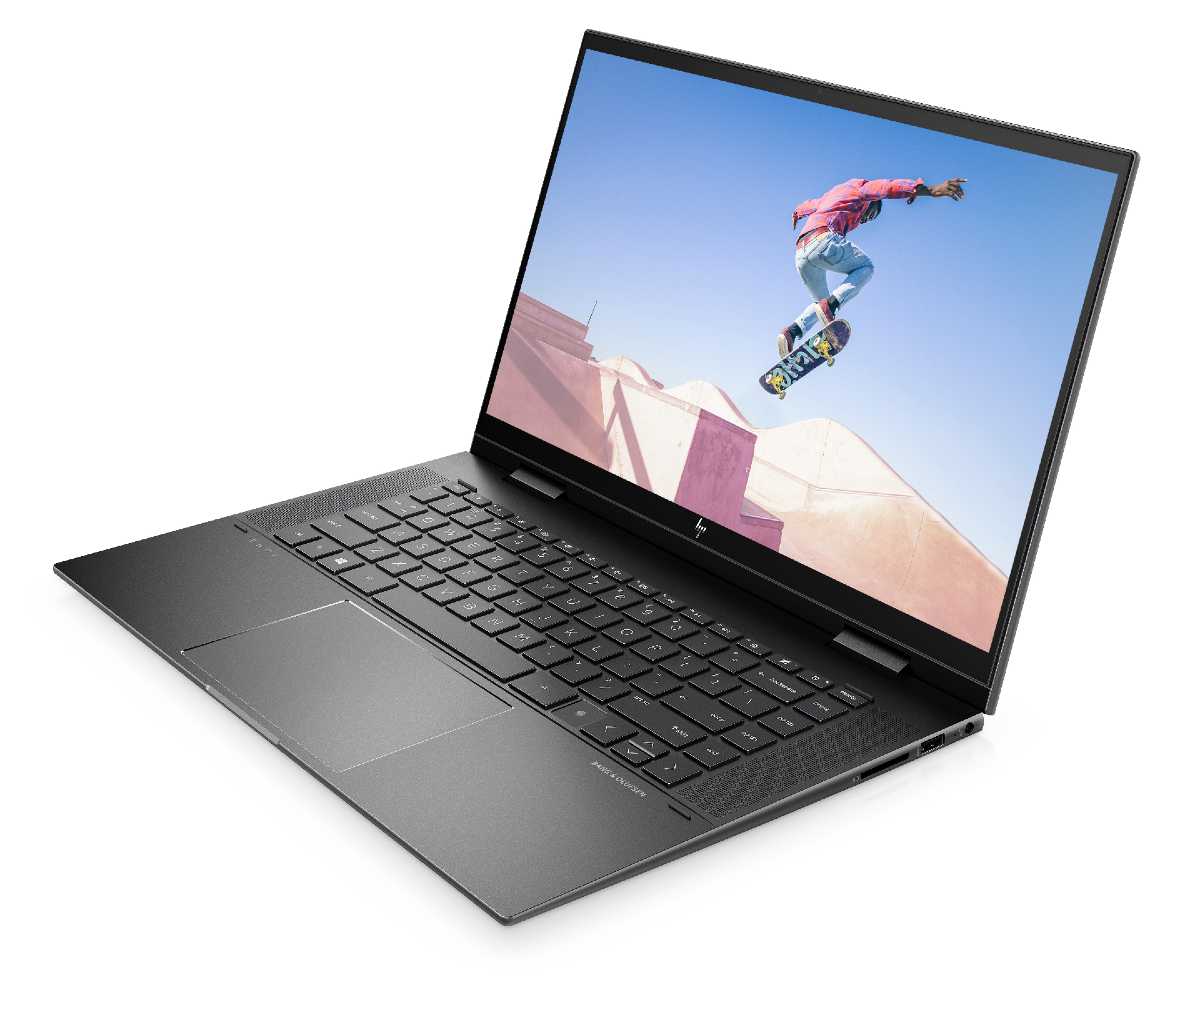 HP ENVY x360 15 2-in-1 creator's laptop (AMD version)